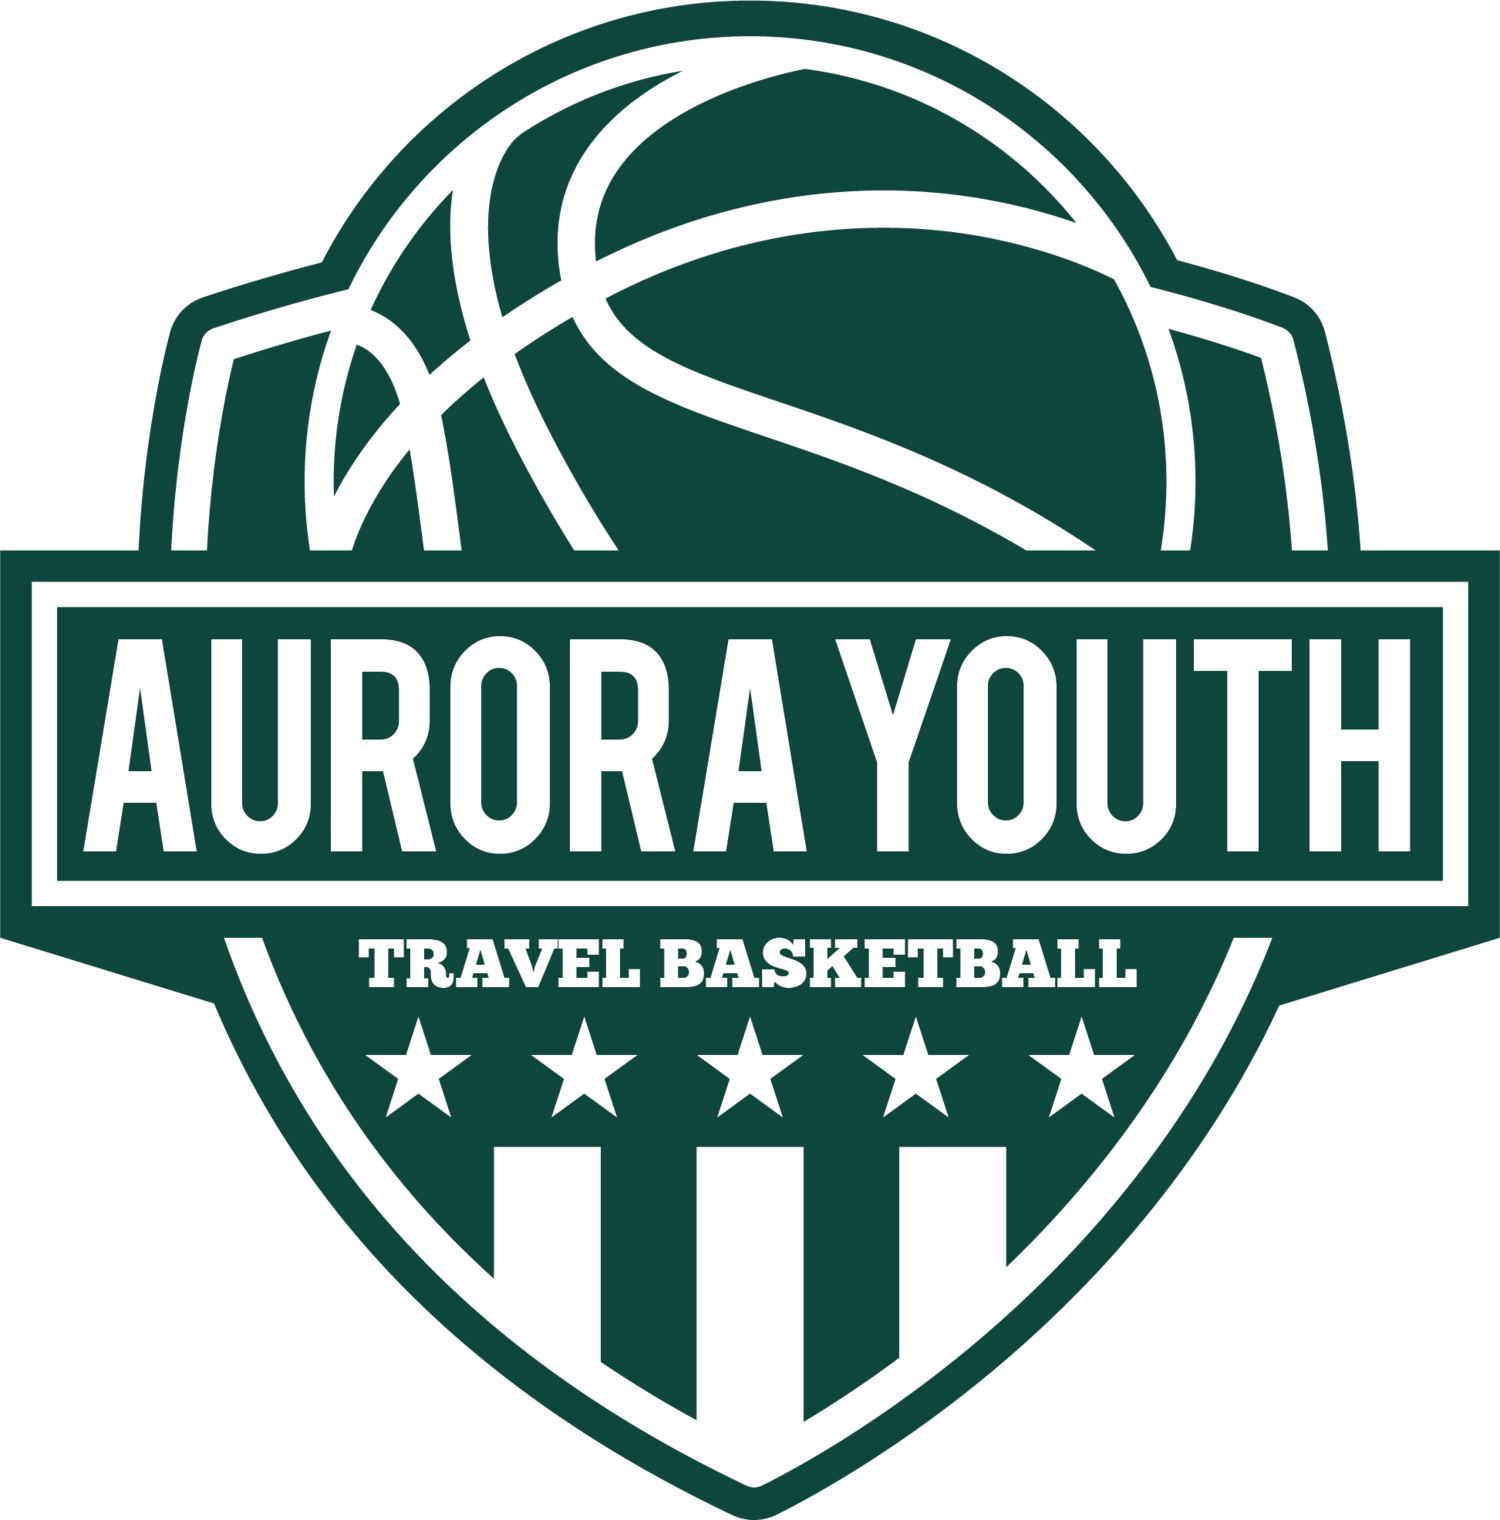 Youth Travel Basketball Logo - Aurora Youth Travel Basketball (AYTB)